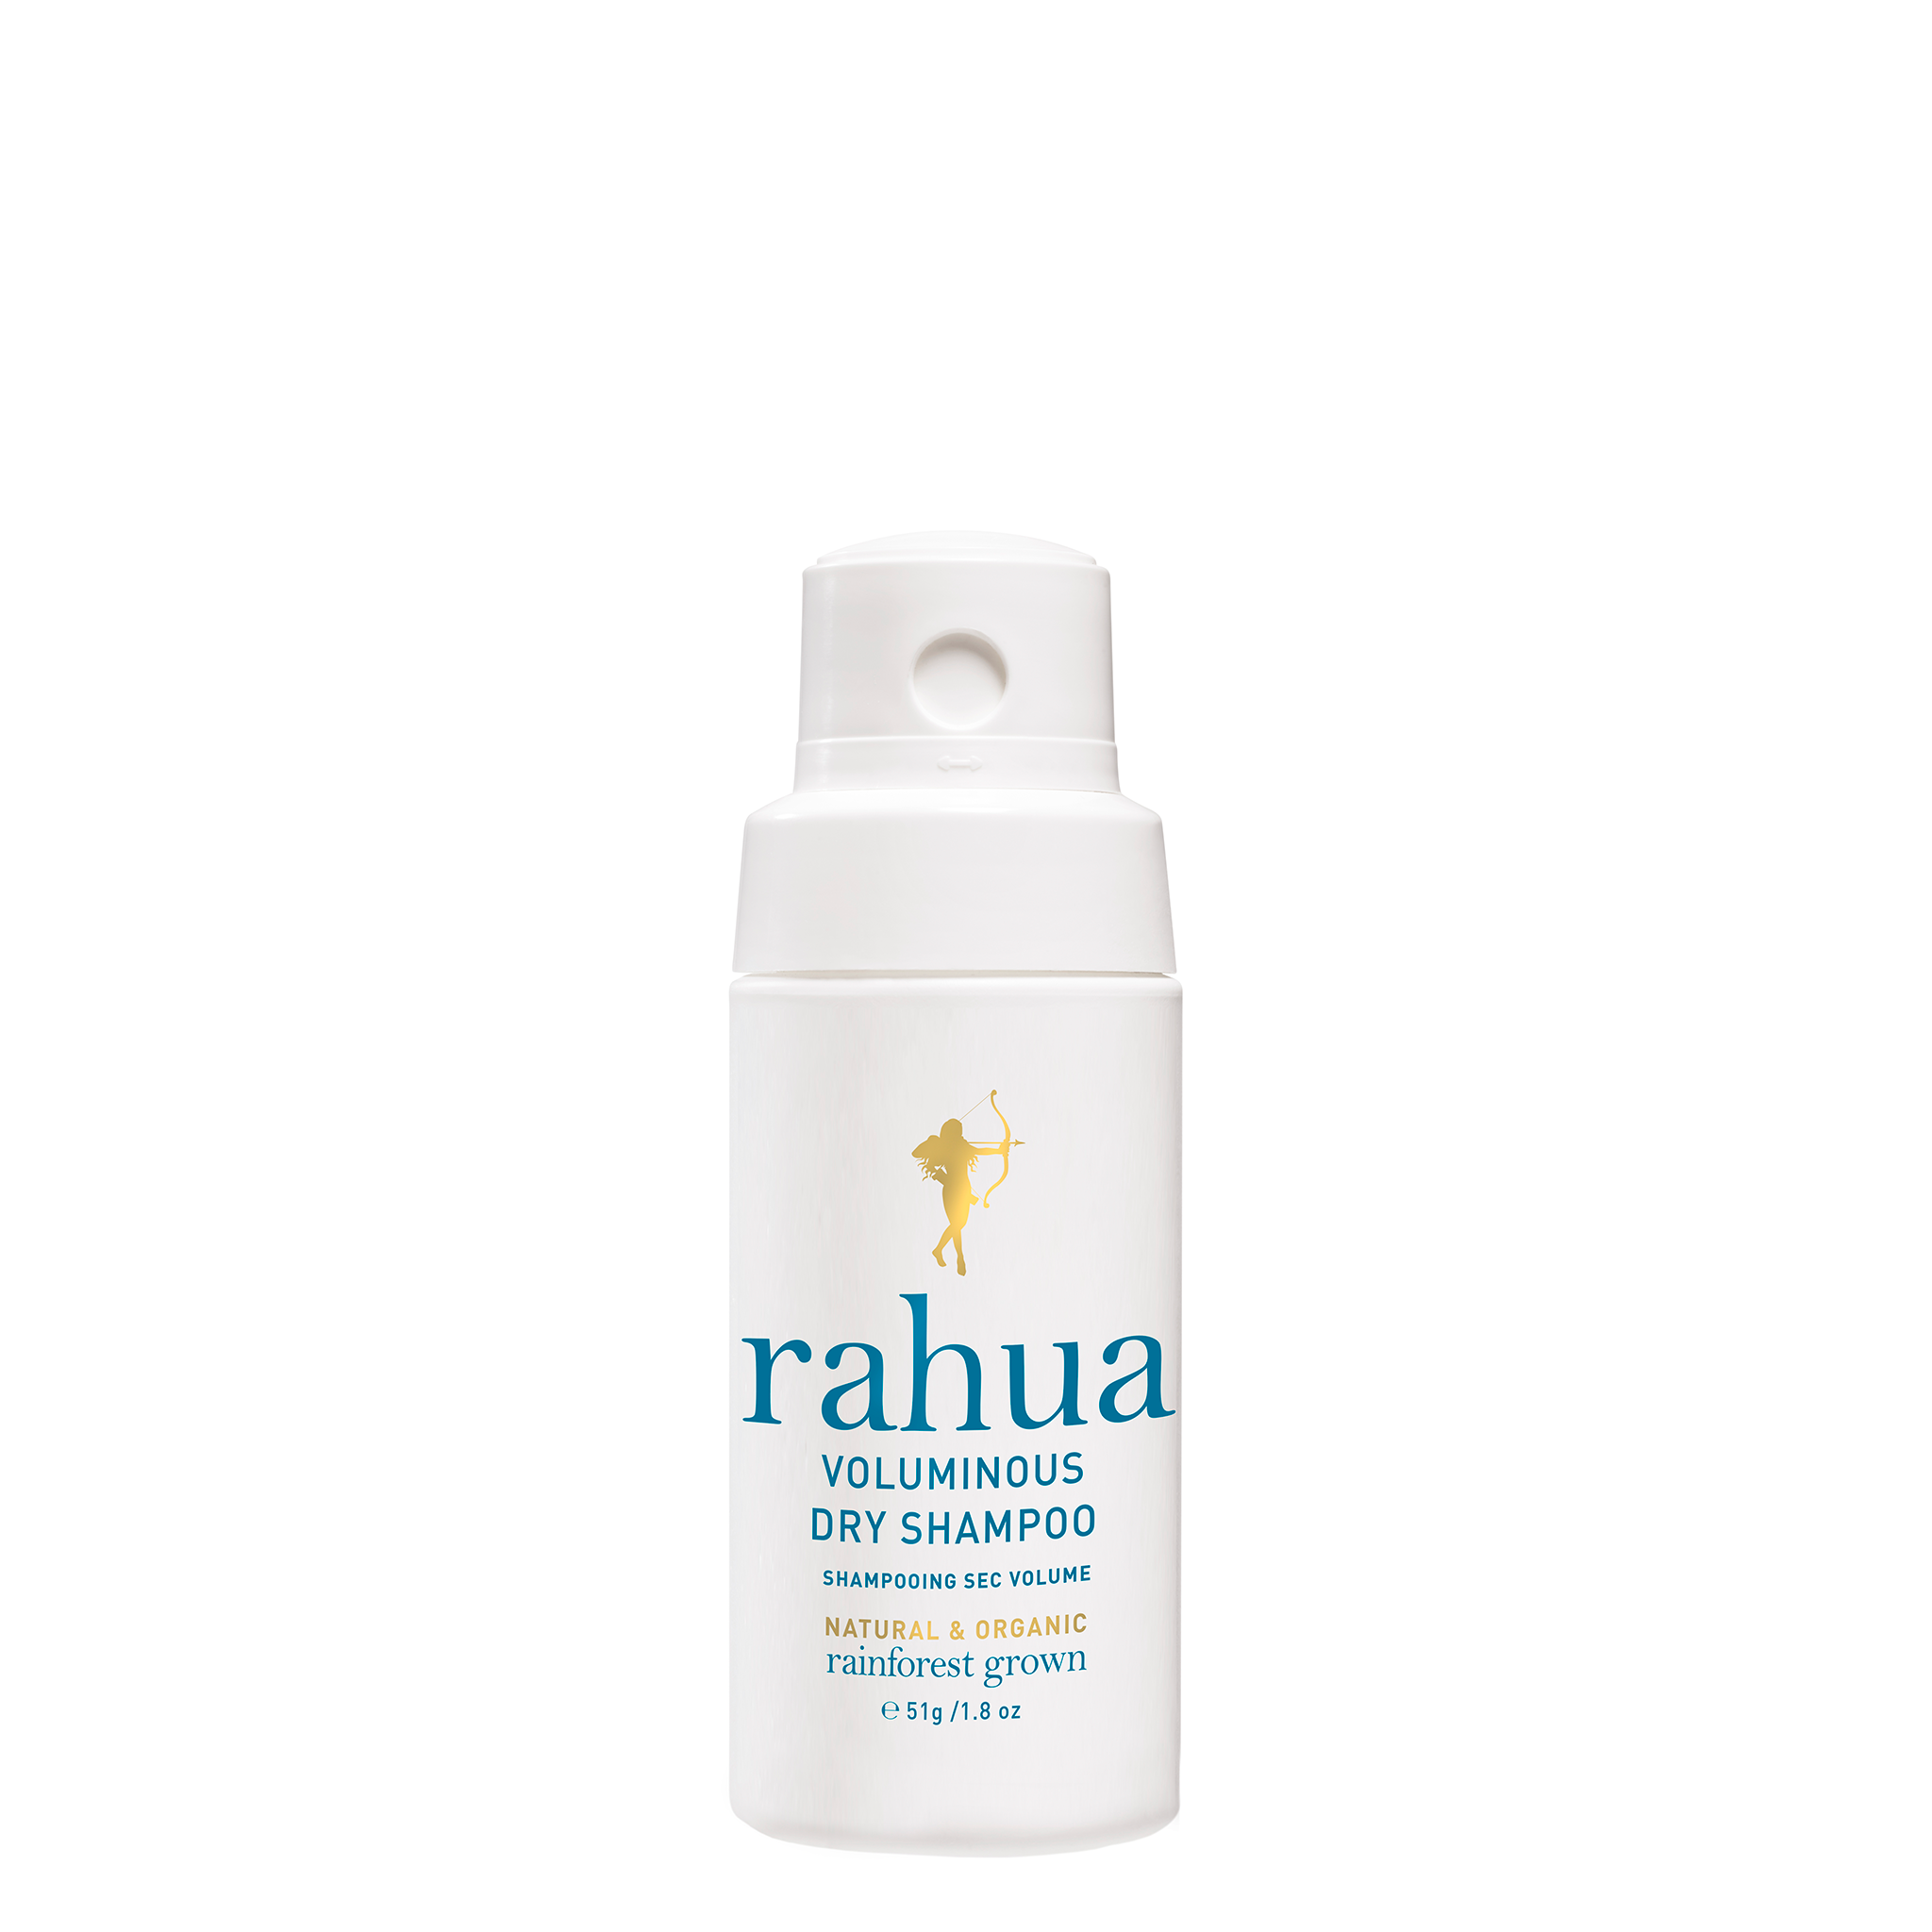 Rahua Voluminous Dry Shampoo $32